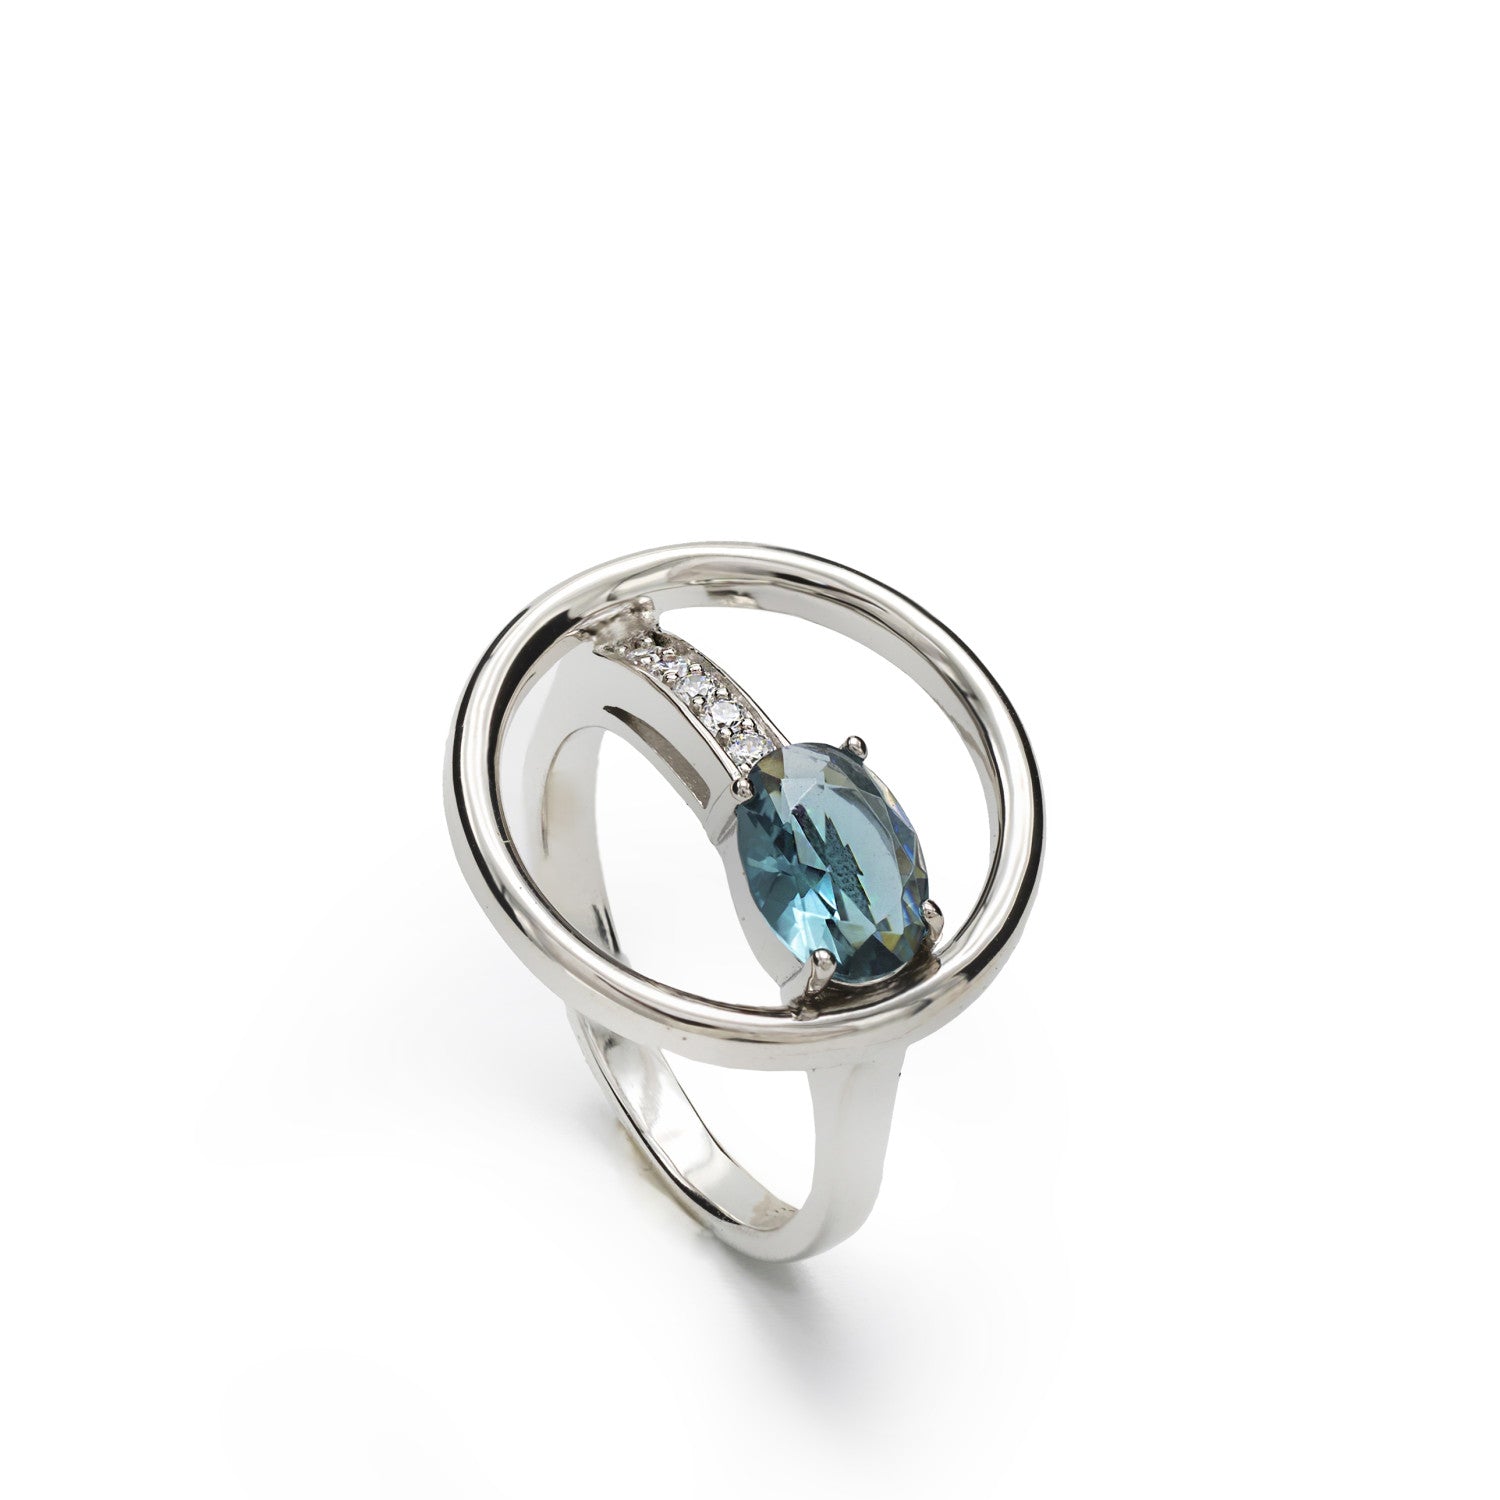 Ring - Circular design rings with gemstone in blue tone